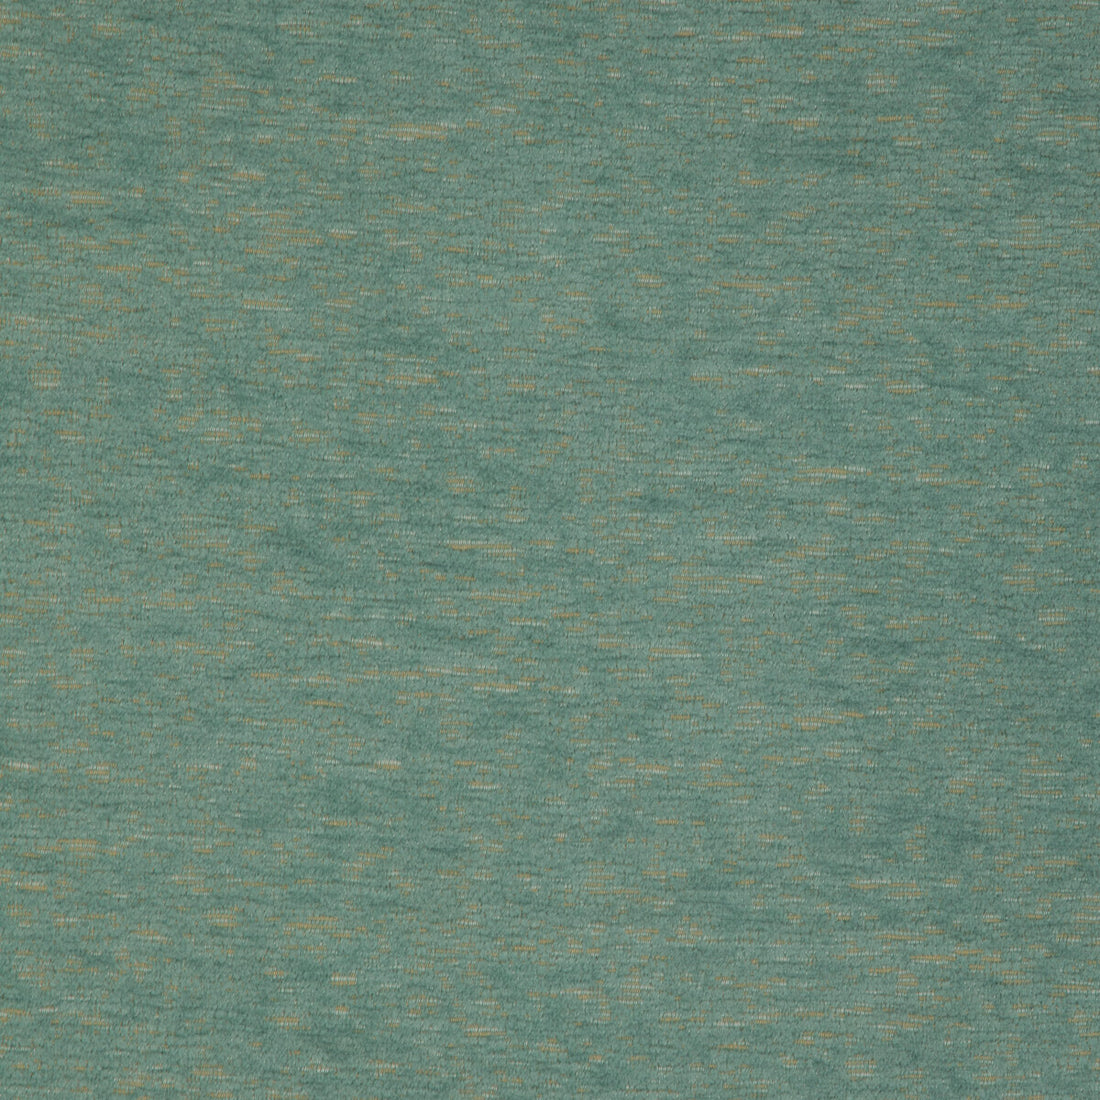 Kravet Smart fabric in 37002-15 color - pattern 37002.15.0 - by Kravet Smart in the Pavilion collection